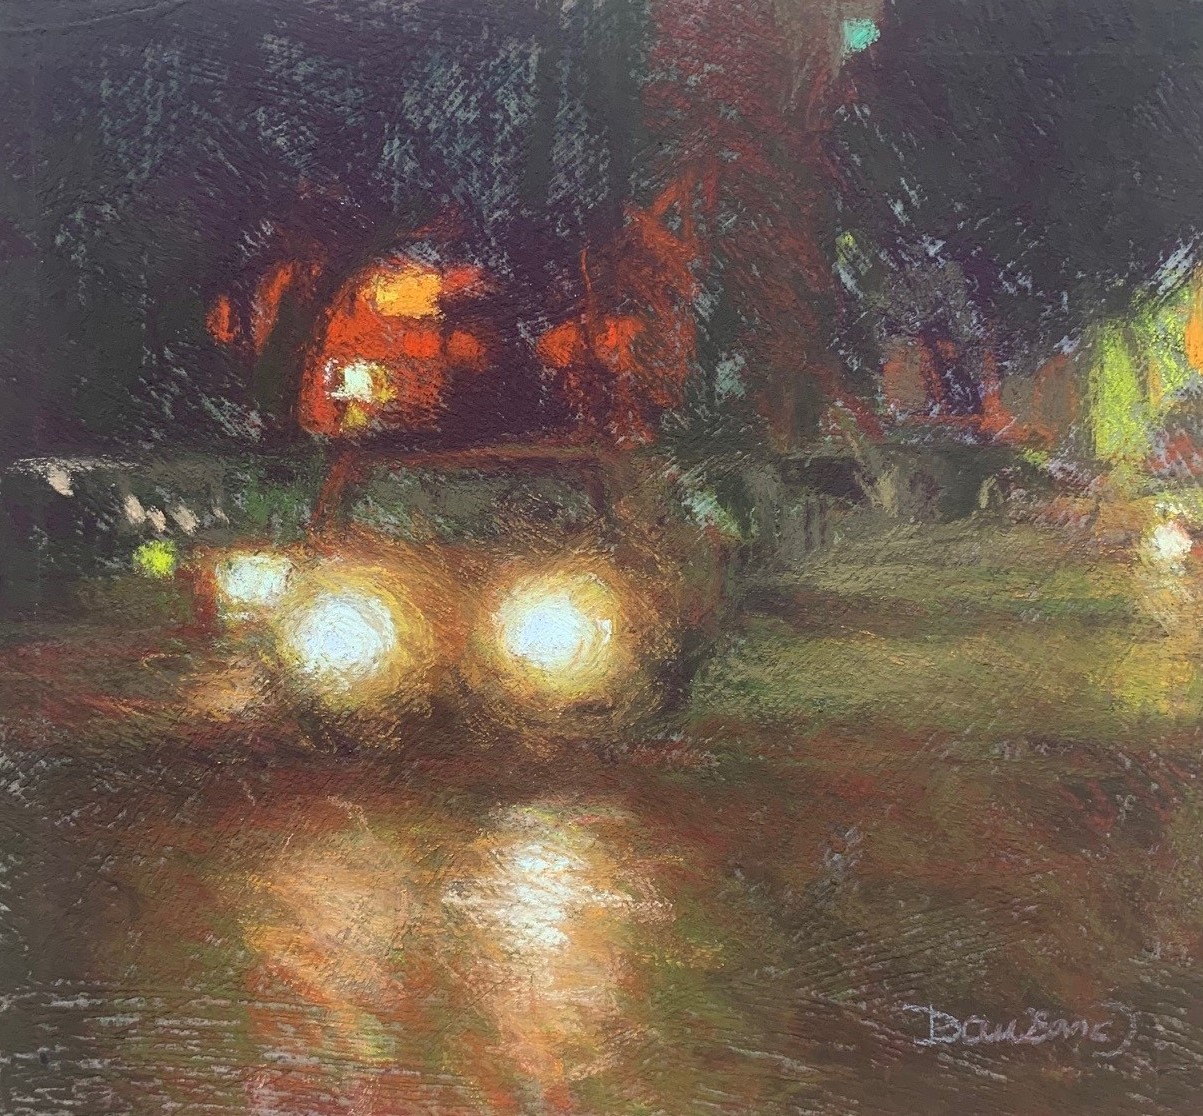 Doug Dawson, “The Approaching Headlights”, pastel